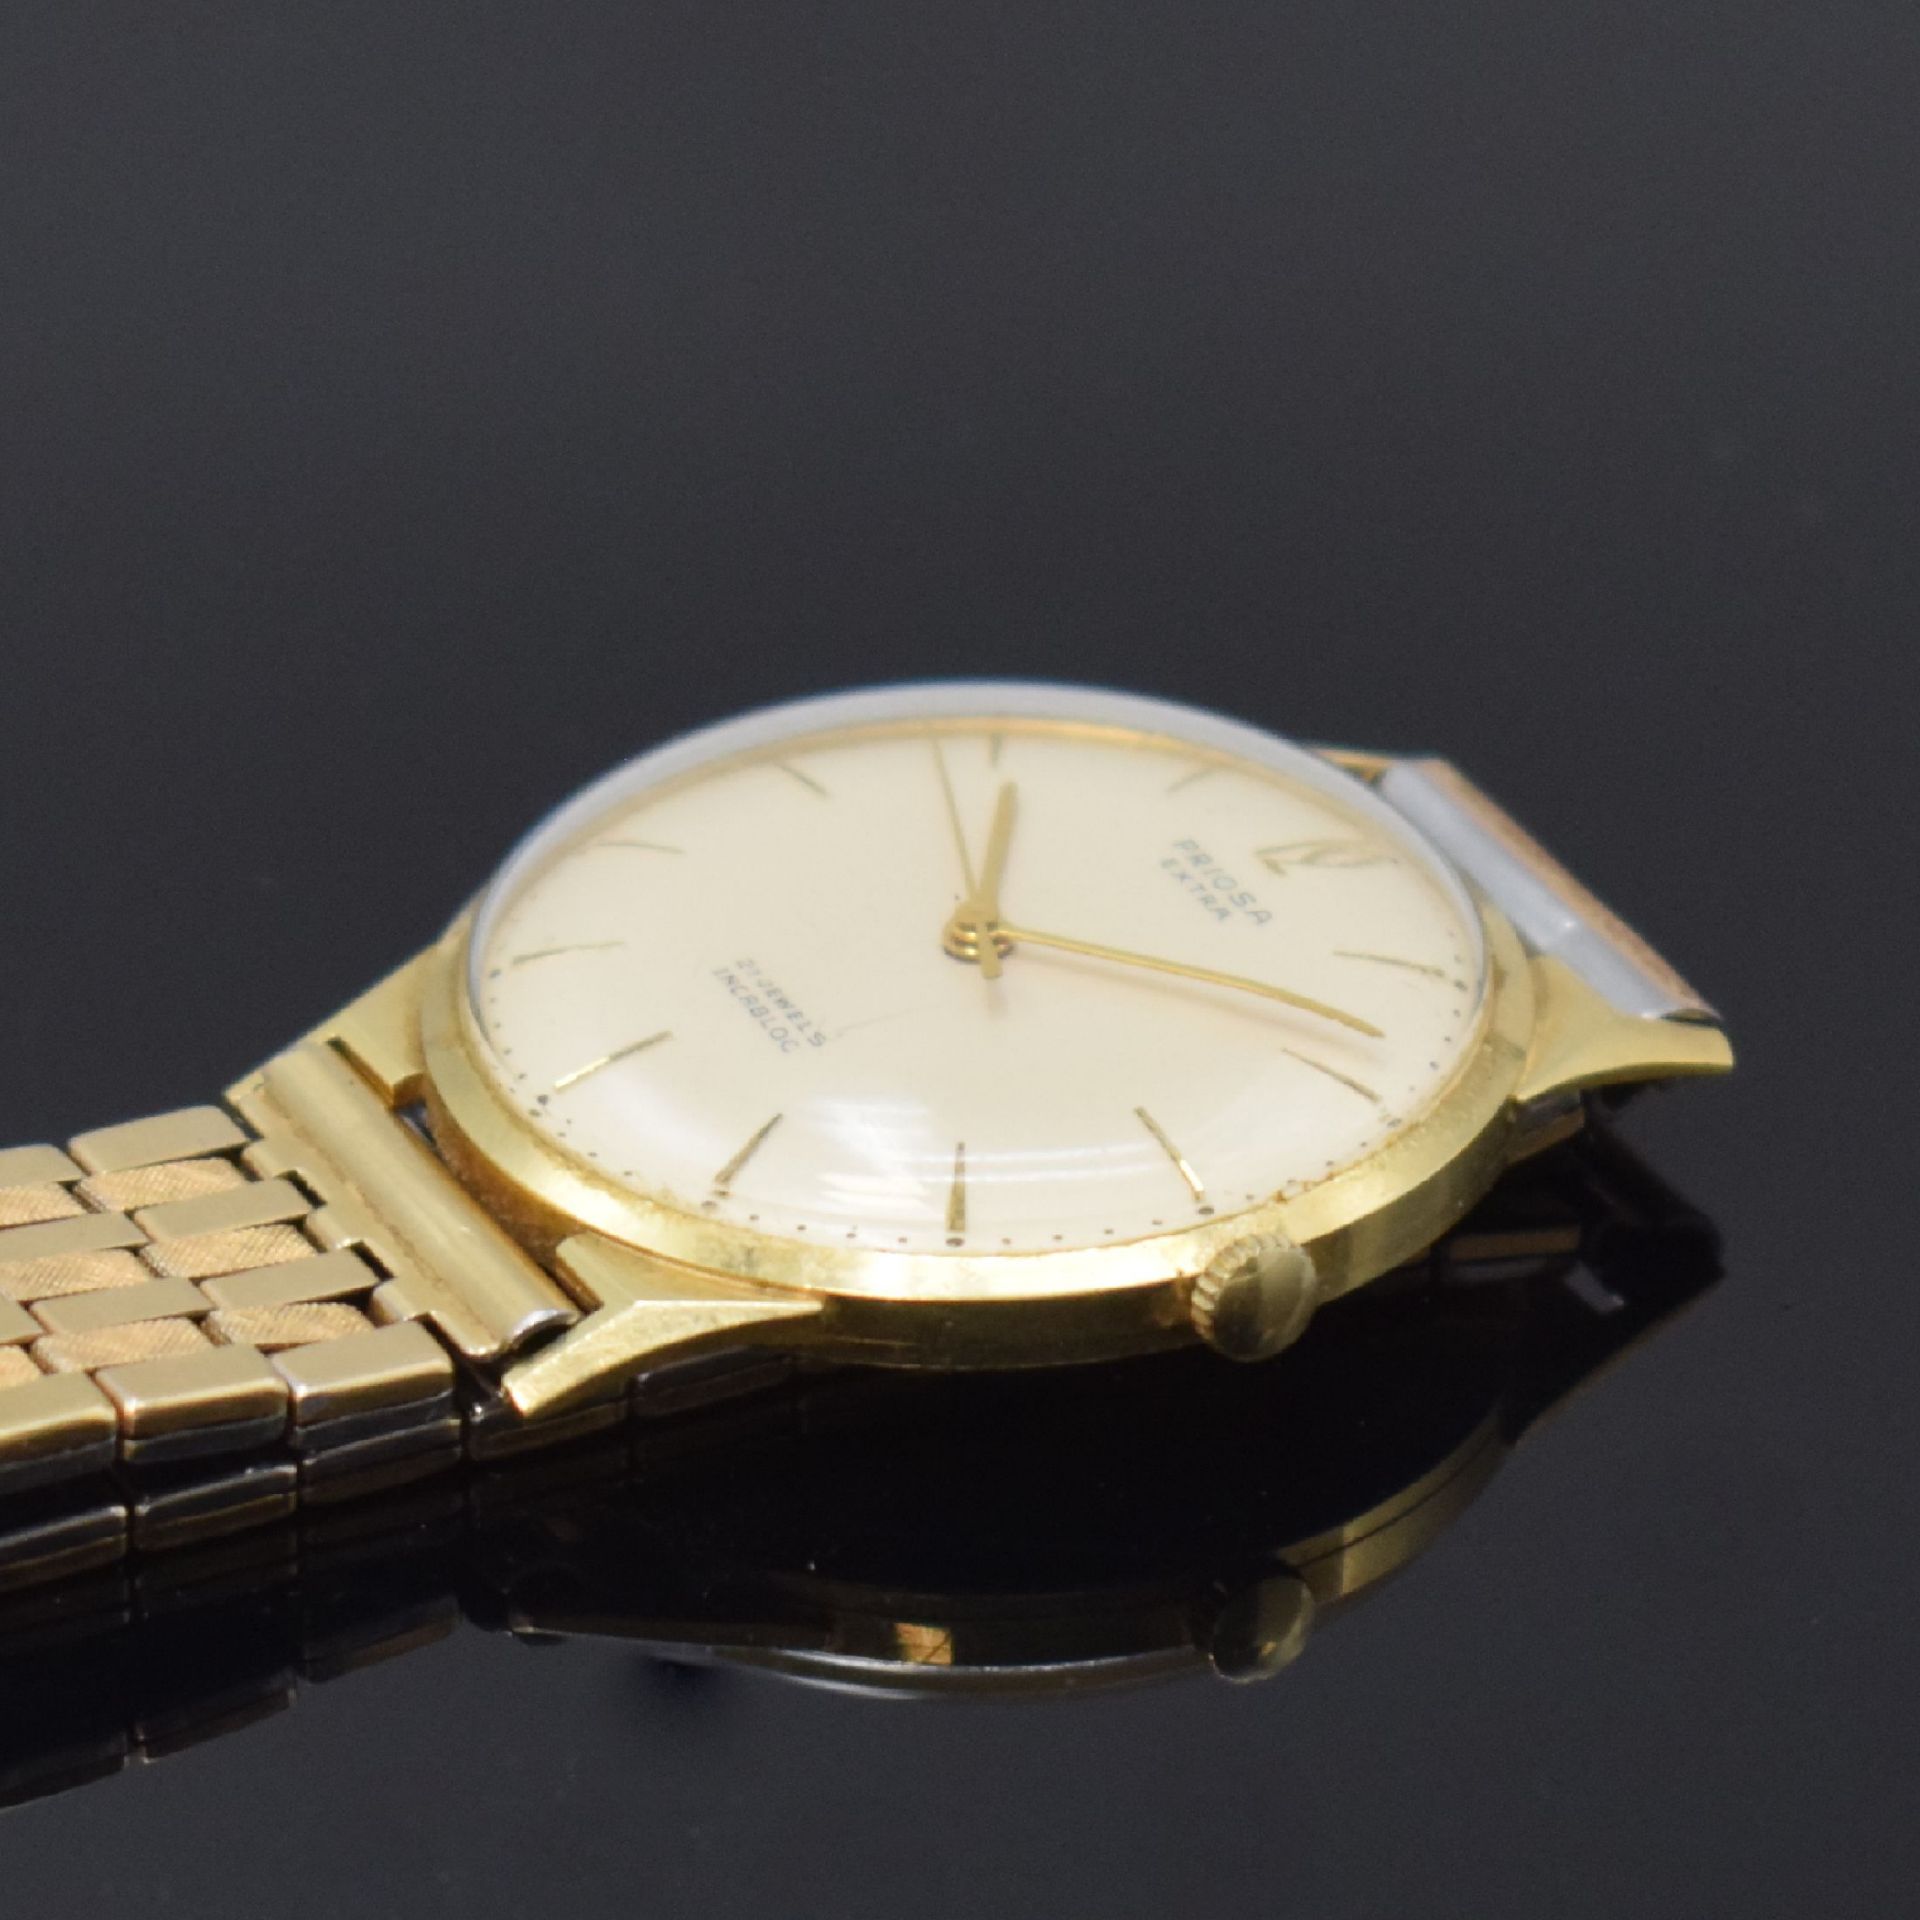 PRIOSA Extra Armbanduhr in GG 585/000, Schweiz um 1960, - Image 3 of 4